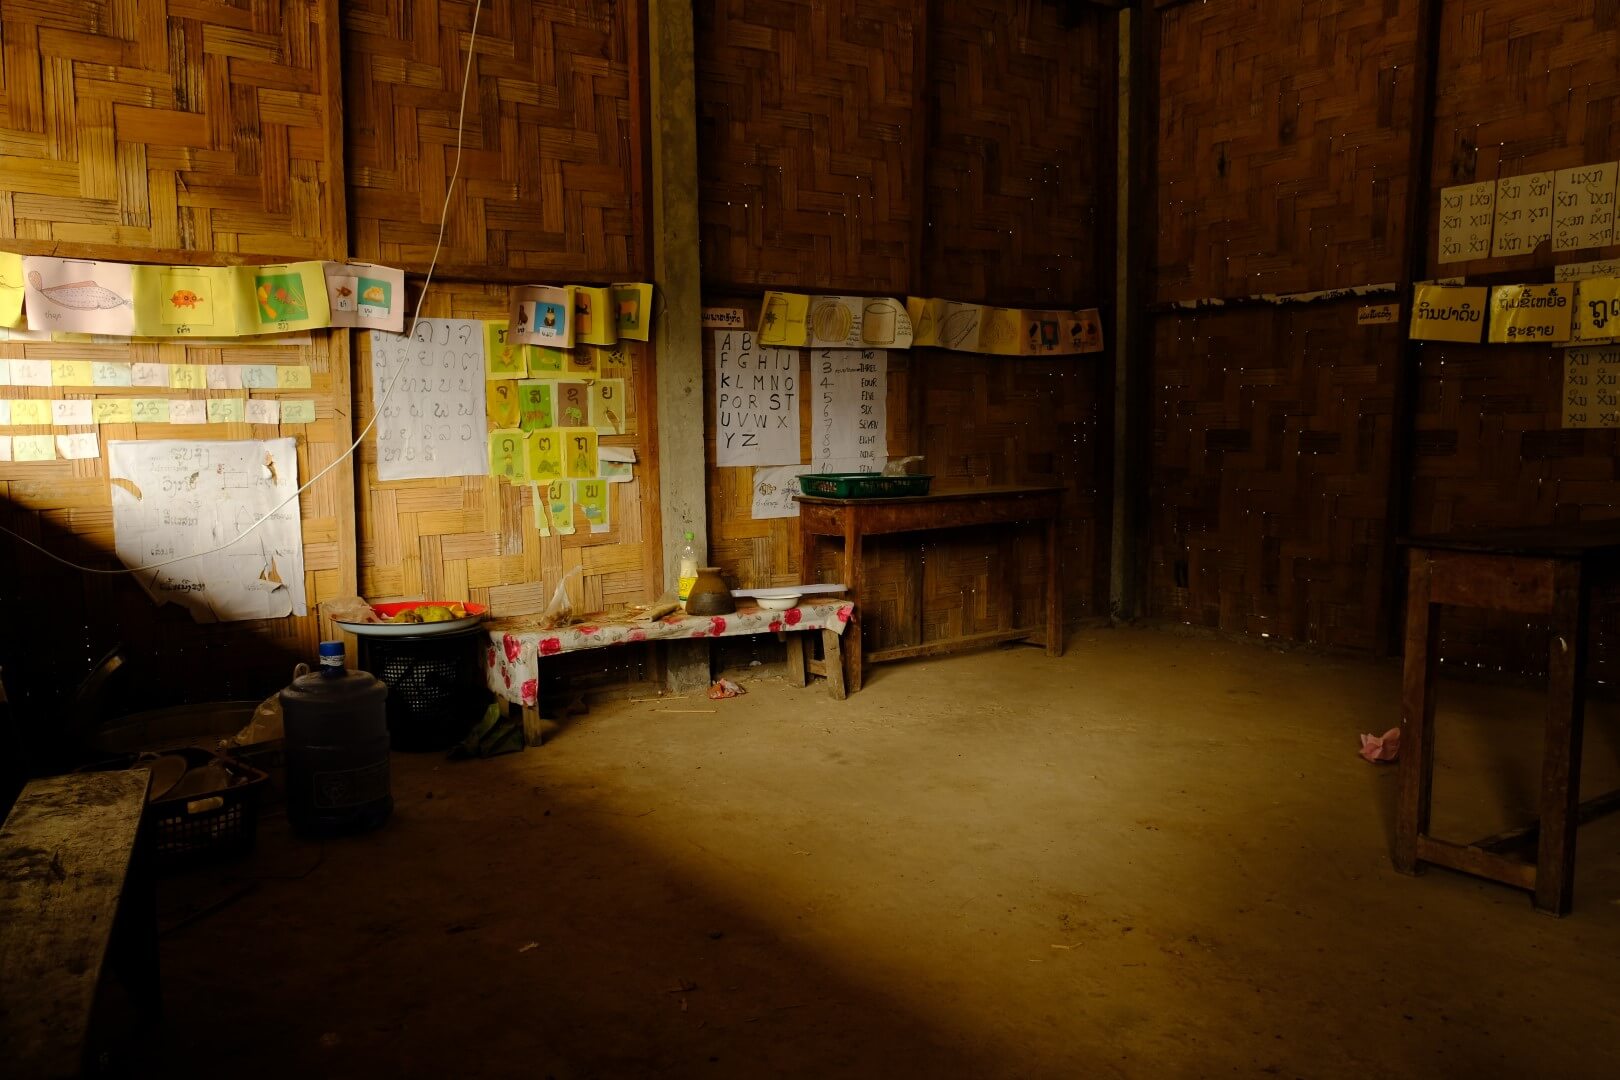 01. Cindy Chan ’05, Australia - Deserted Classroom